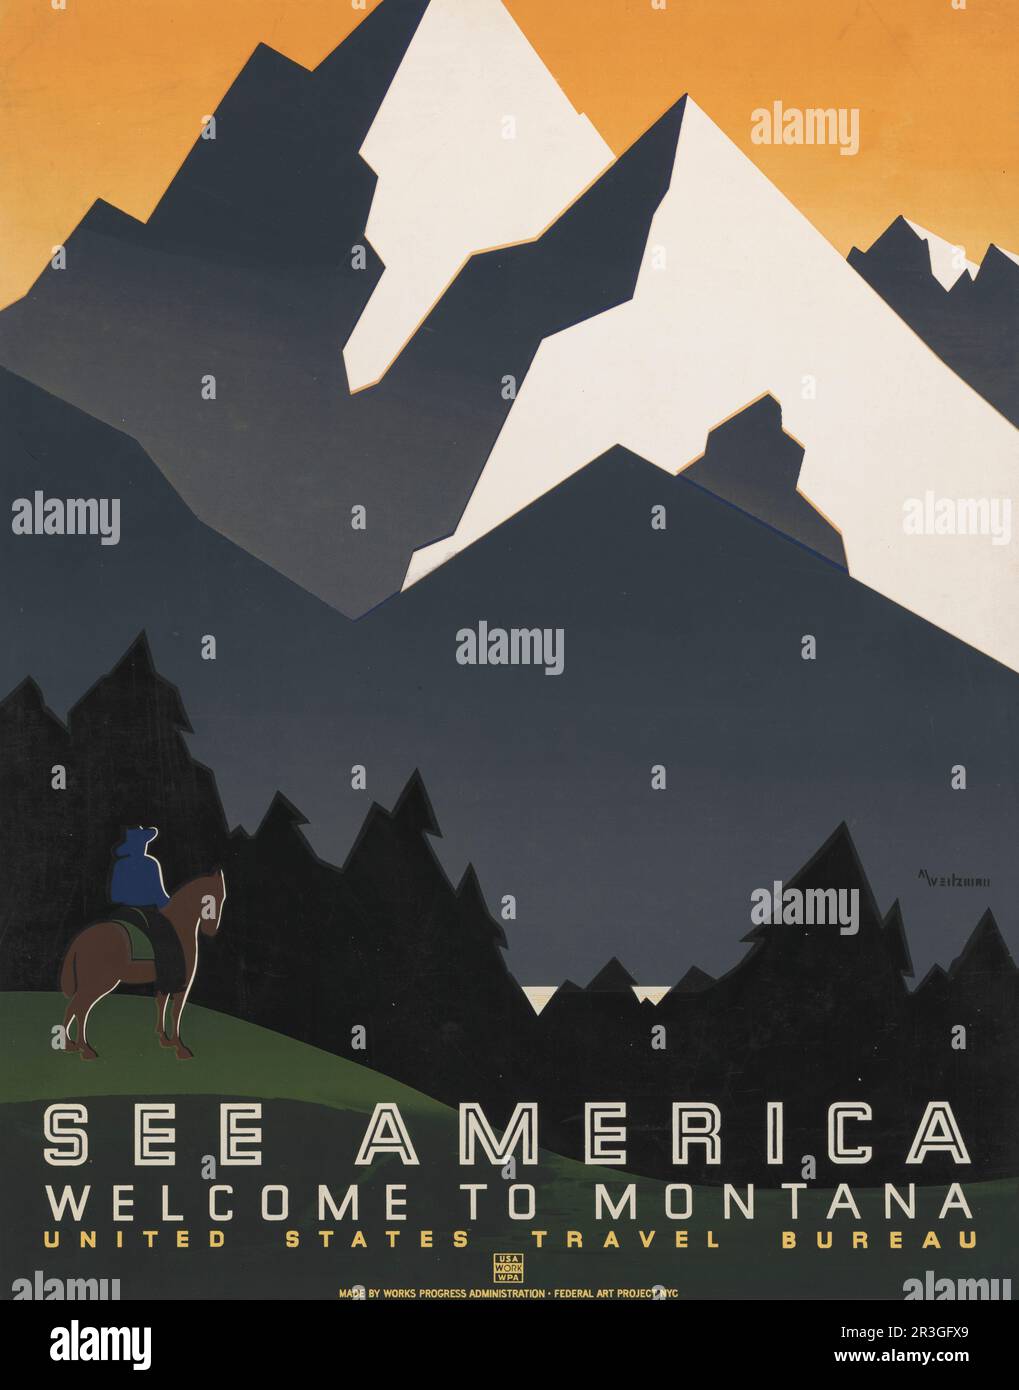 Vintage 1936 travel poster for United States Travel Bureau promoting travel to Montana. Stock Photo